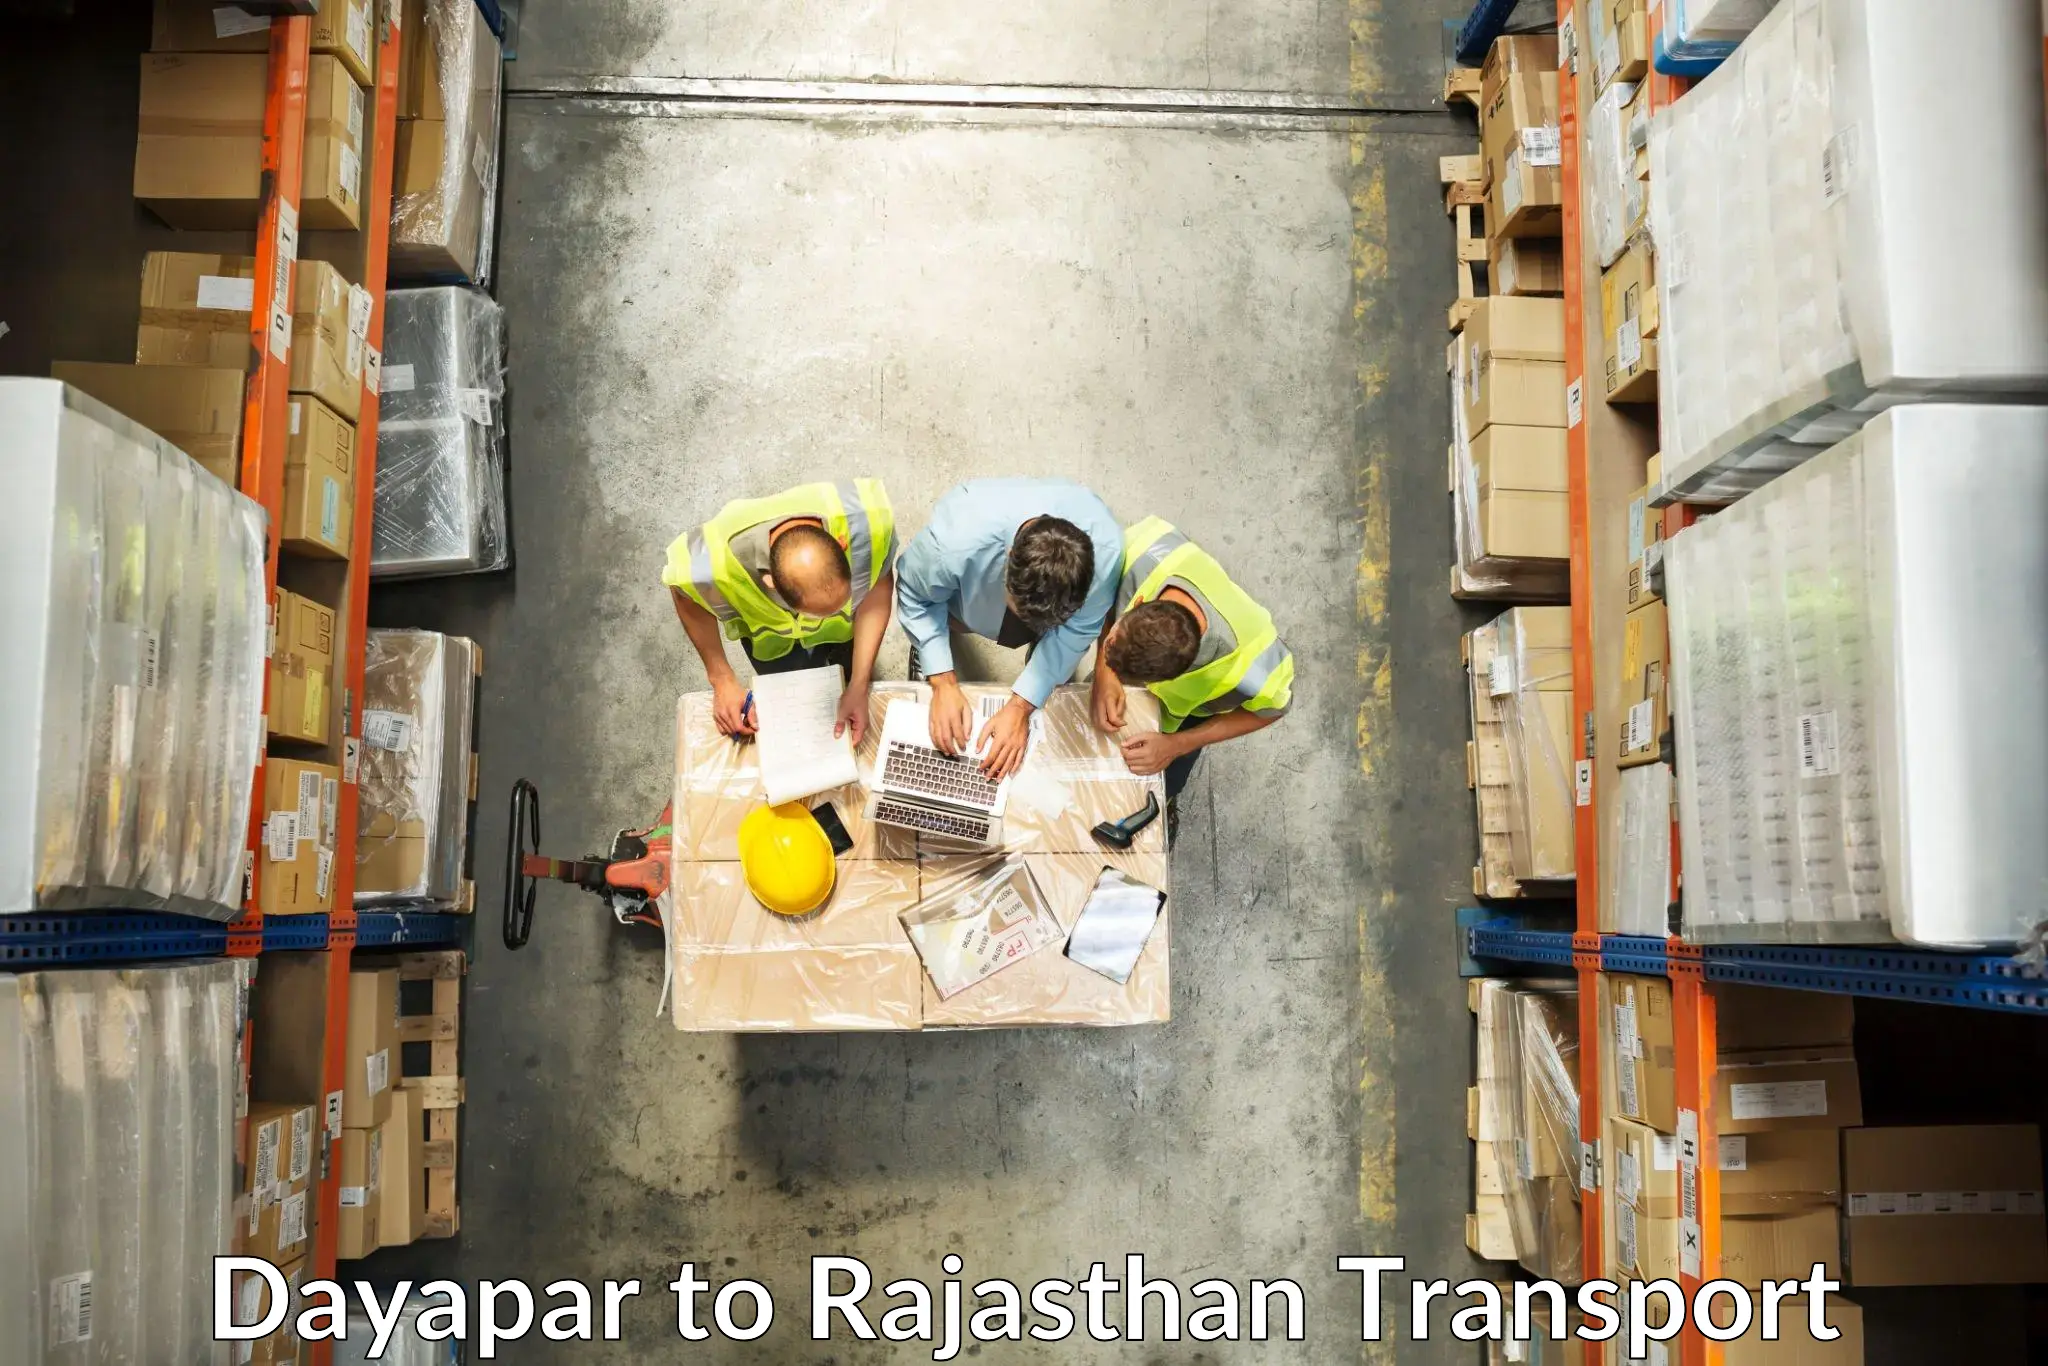 Truck transport companies in India Dayapar to Dholpur